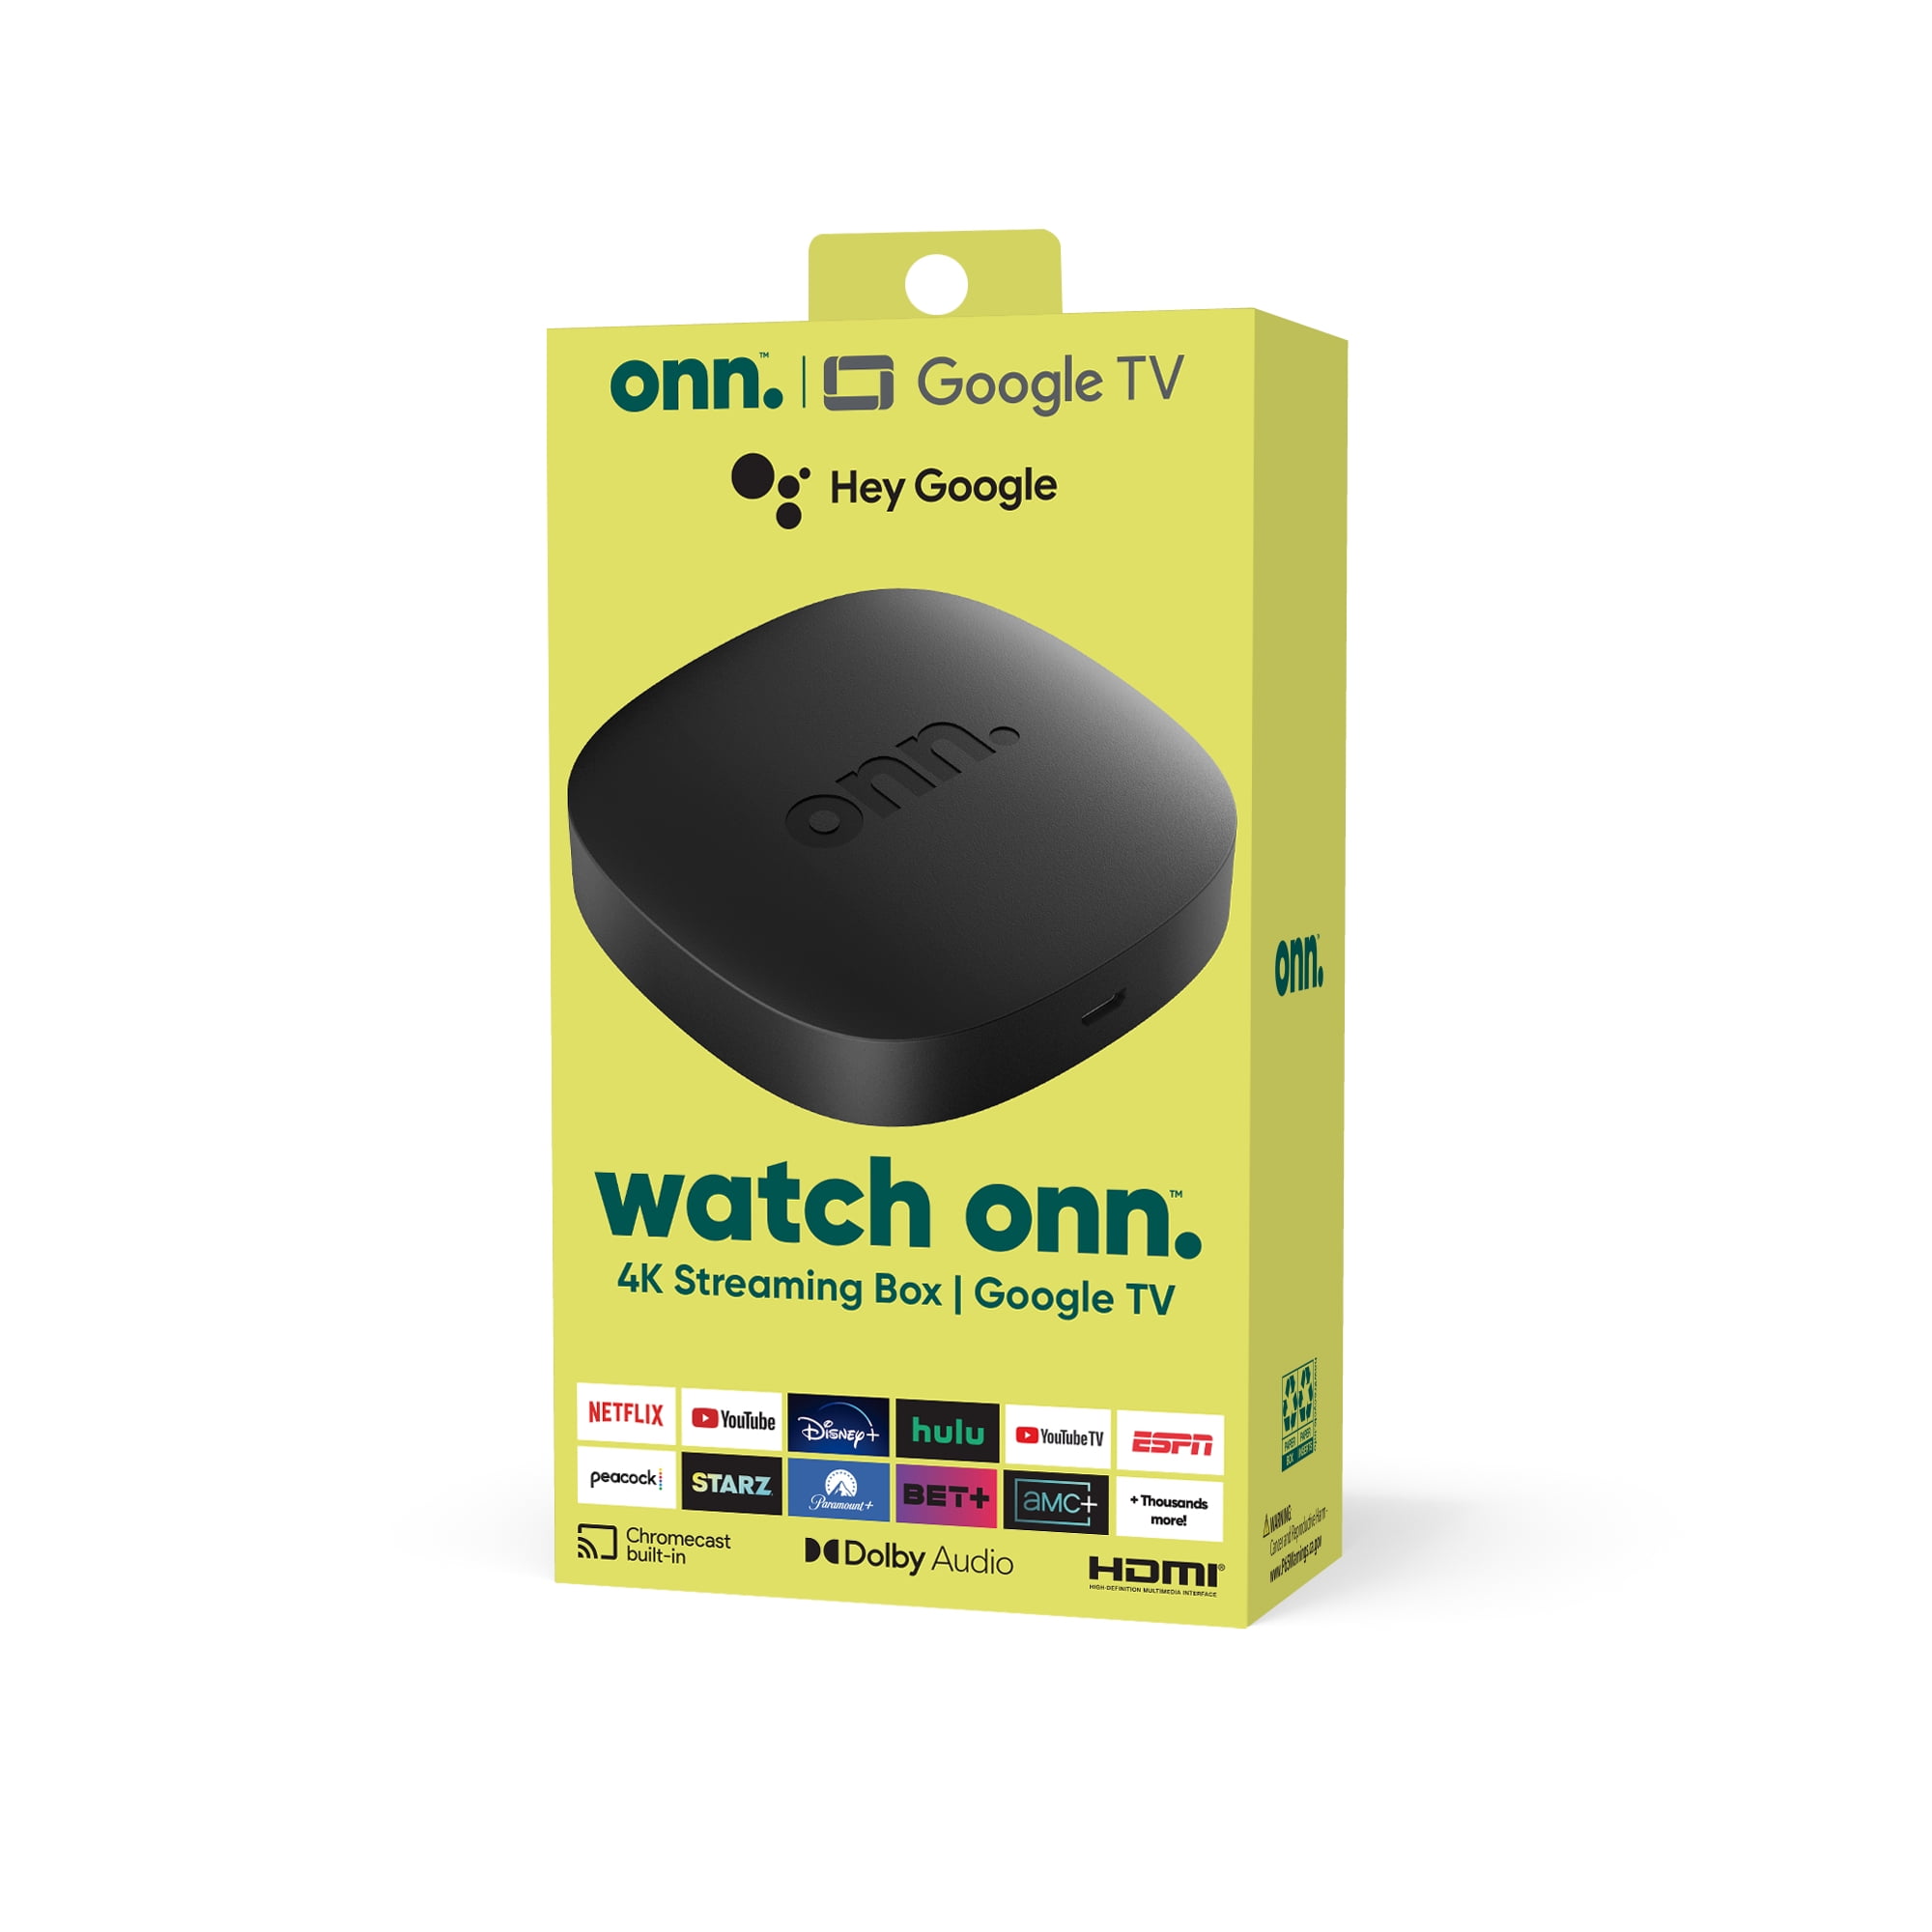 Onn. Google TV 4K Streaming Box, 4K UHD Resolution (New)